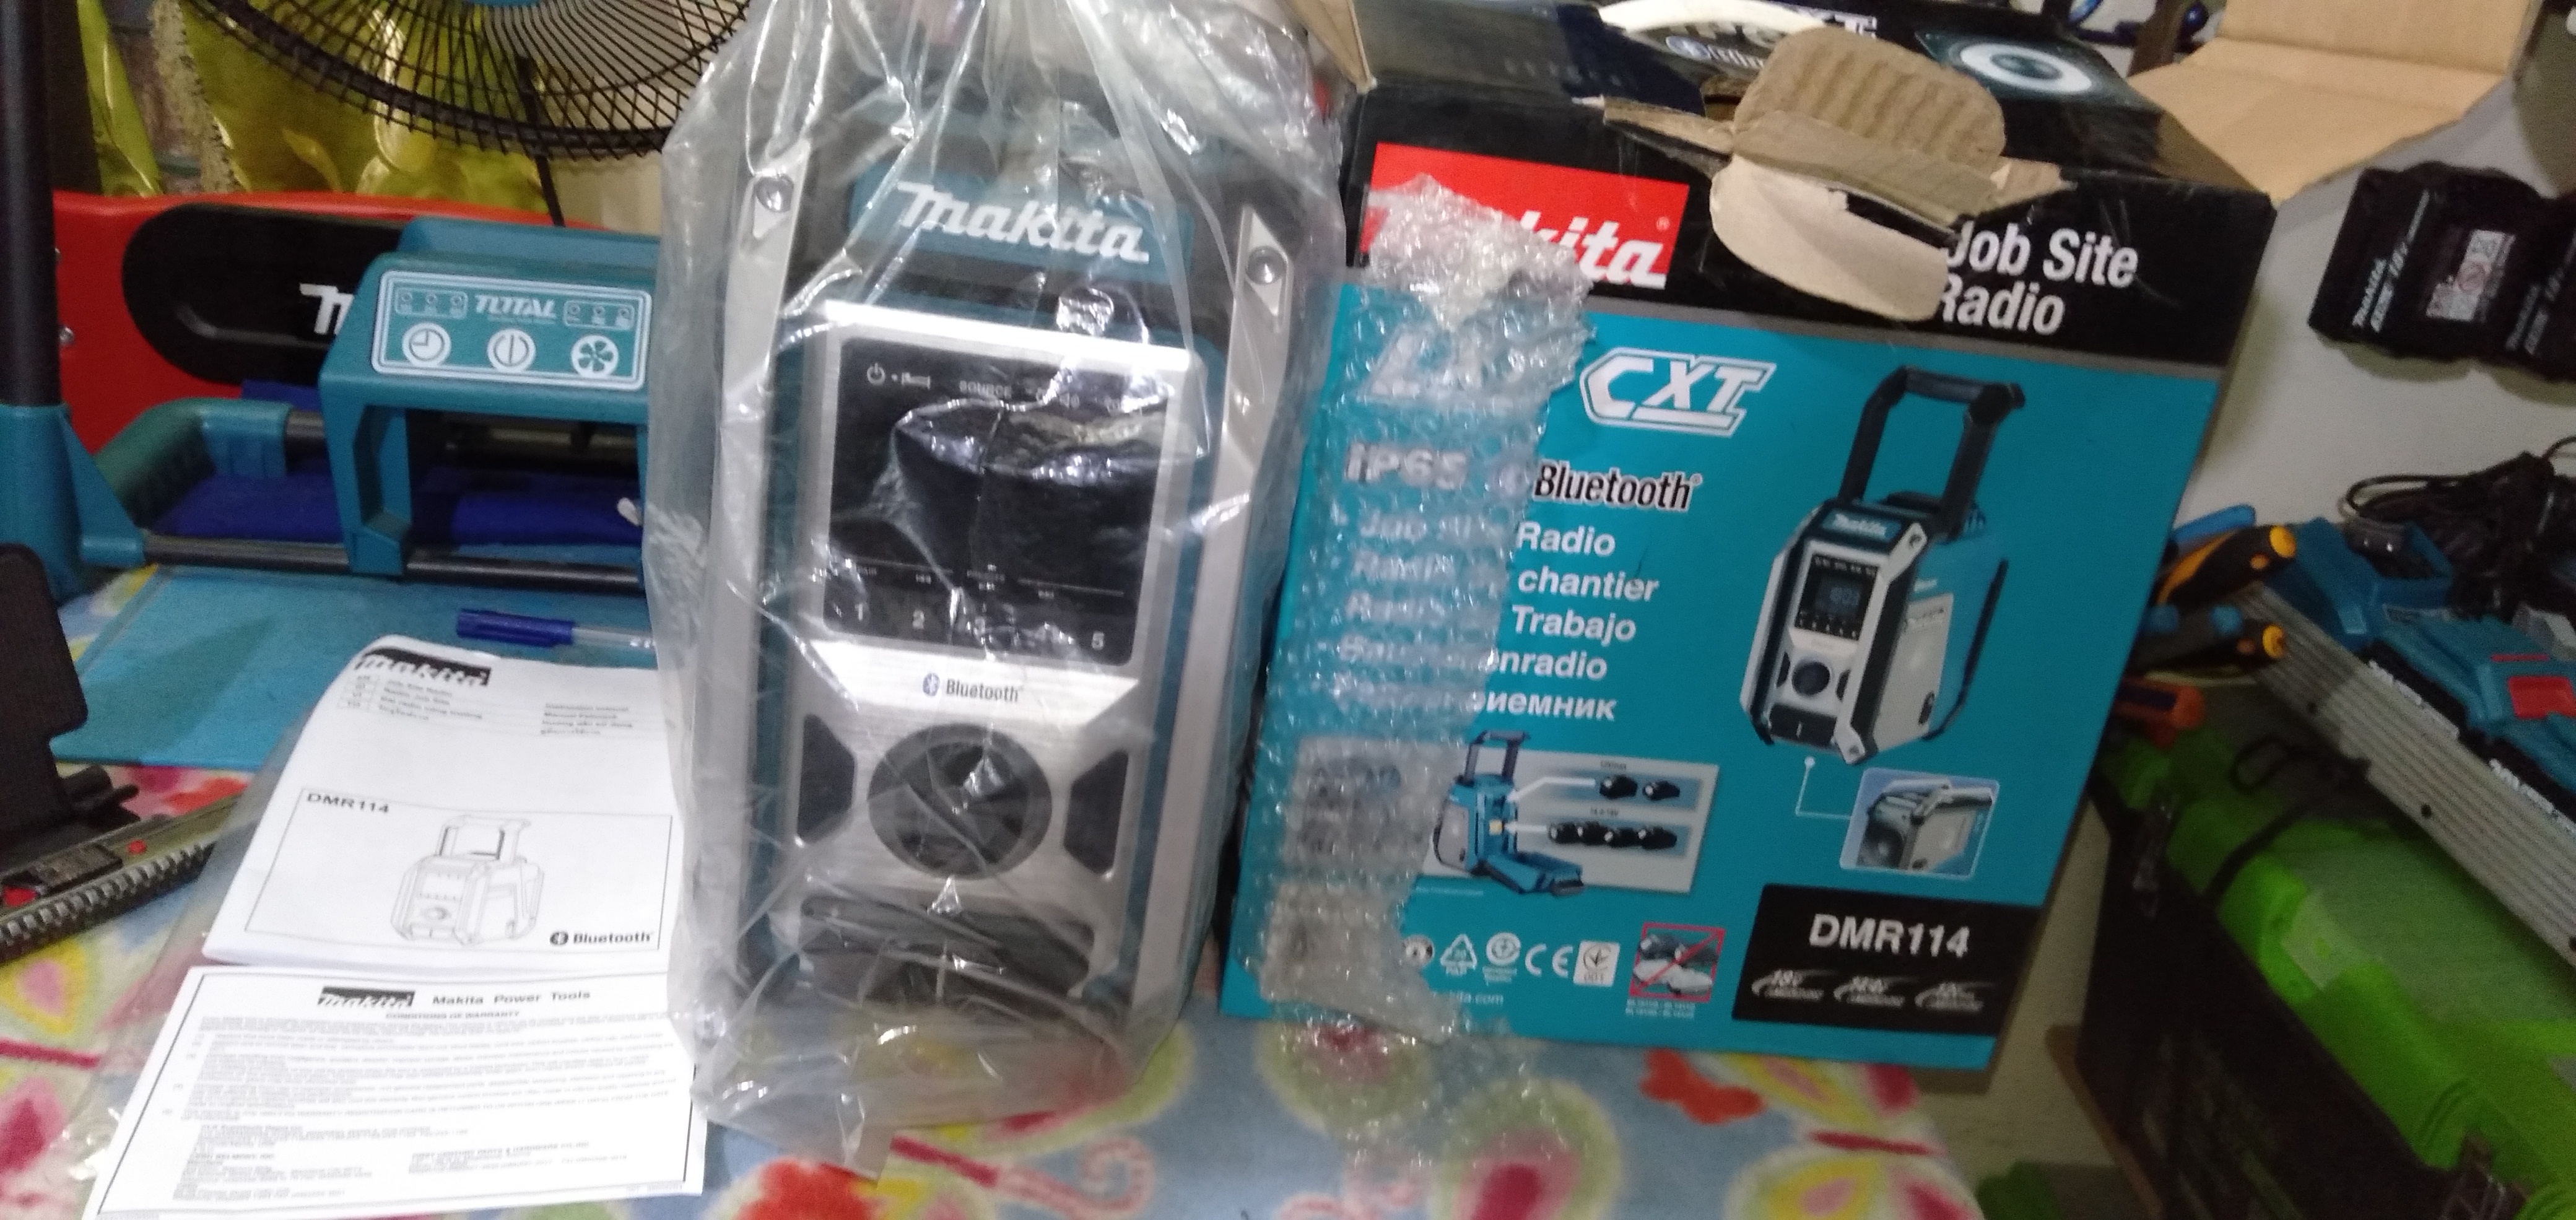 DMR114 / Makita DMR114 Cordless or Electric Jobsite Radio with Bluetooth